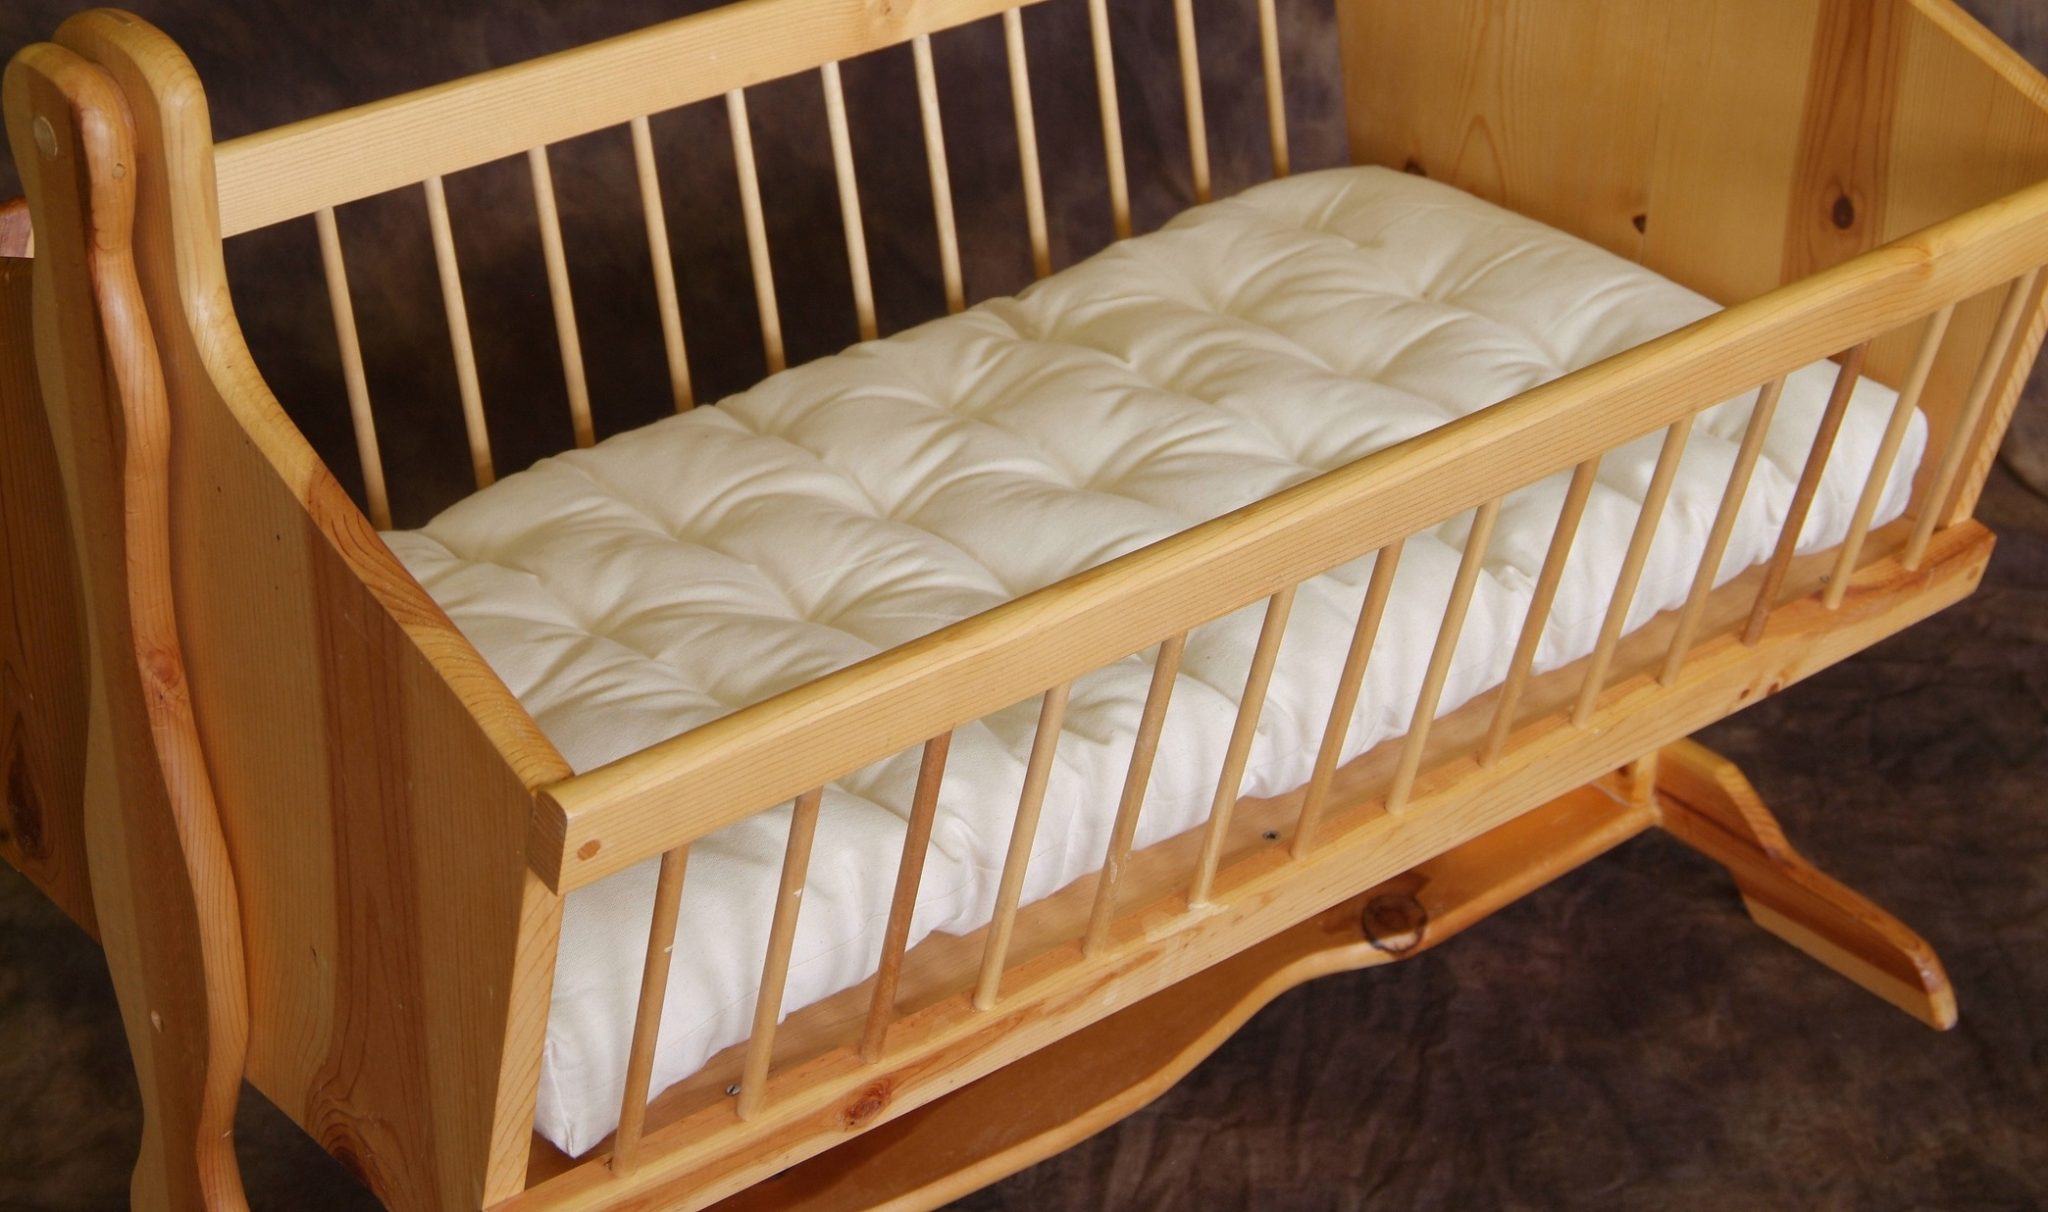 bassinet mattress cover canada